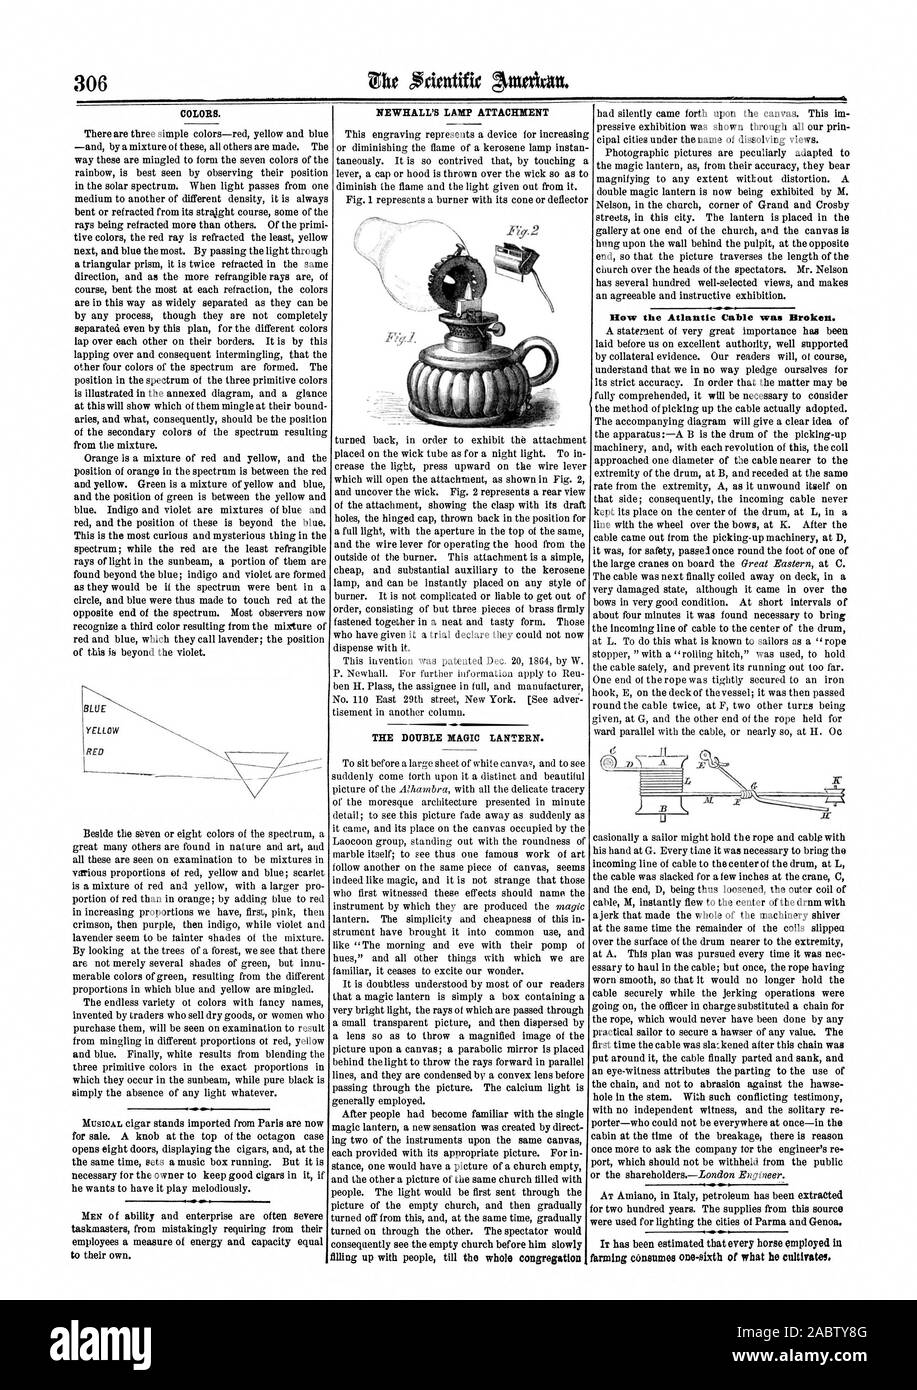 Farben. NEWHALL DIE LAMPE ANLAGE DIE DOUBLE MAGIC LANTERN., Scientific American, 1865-11-11 Stockfoto